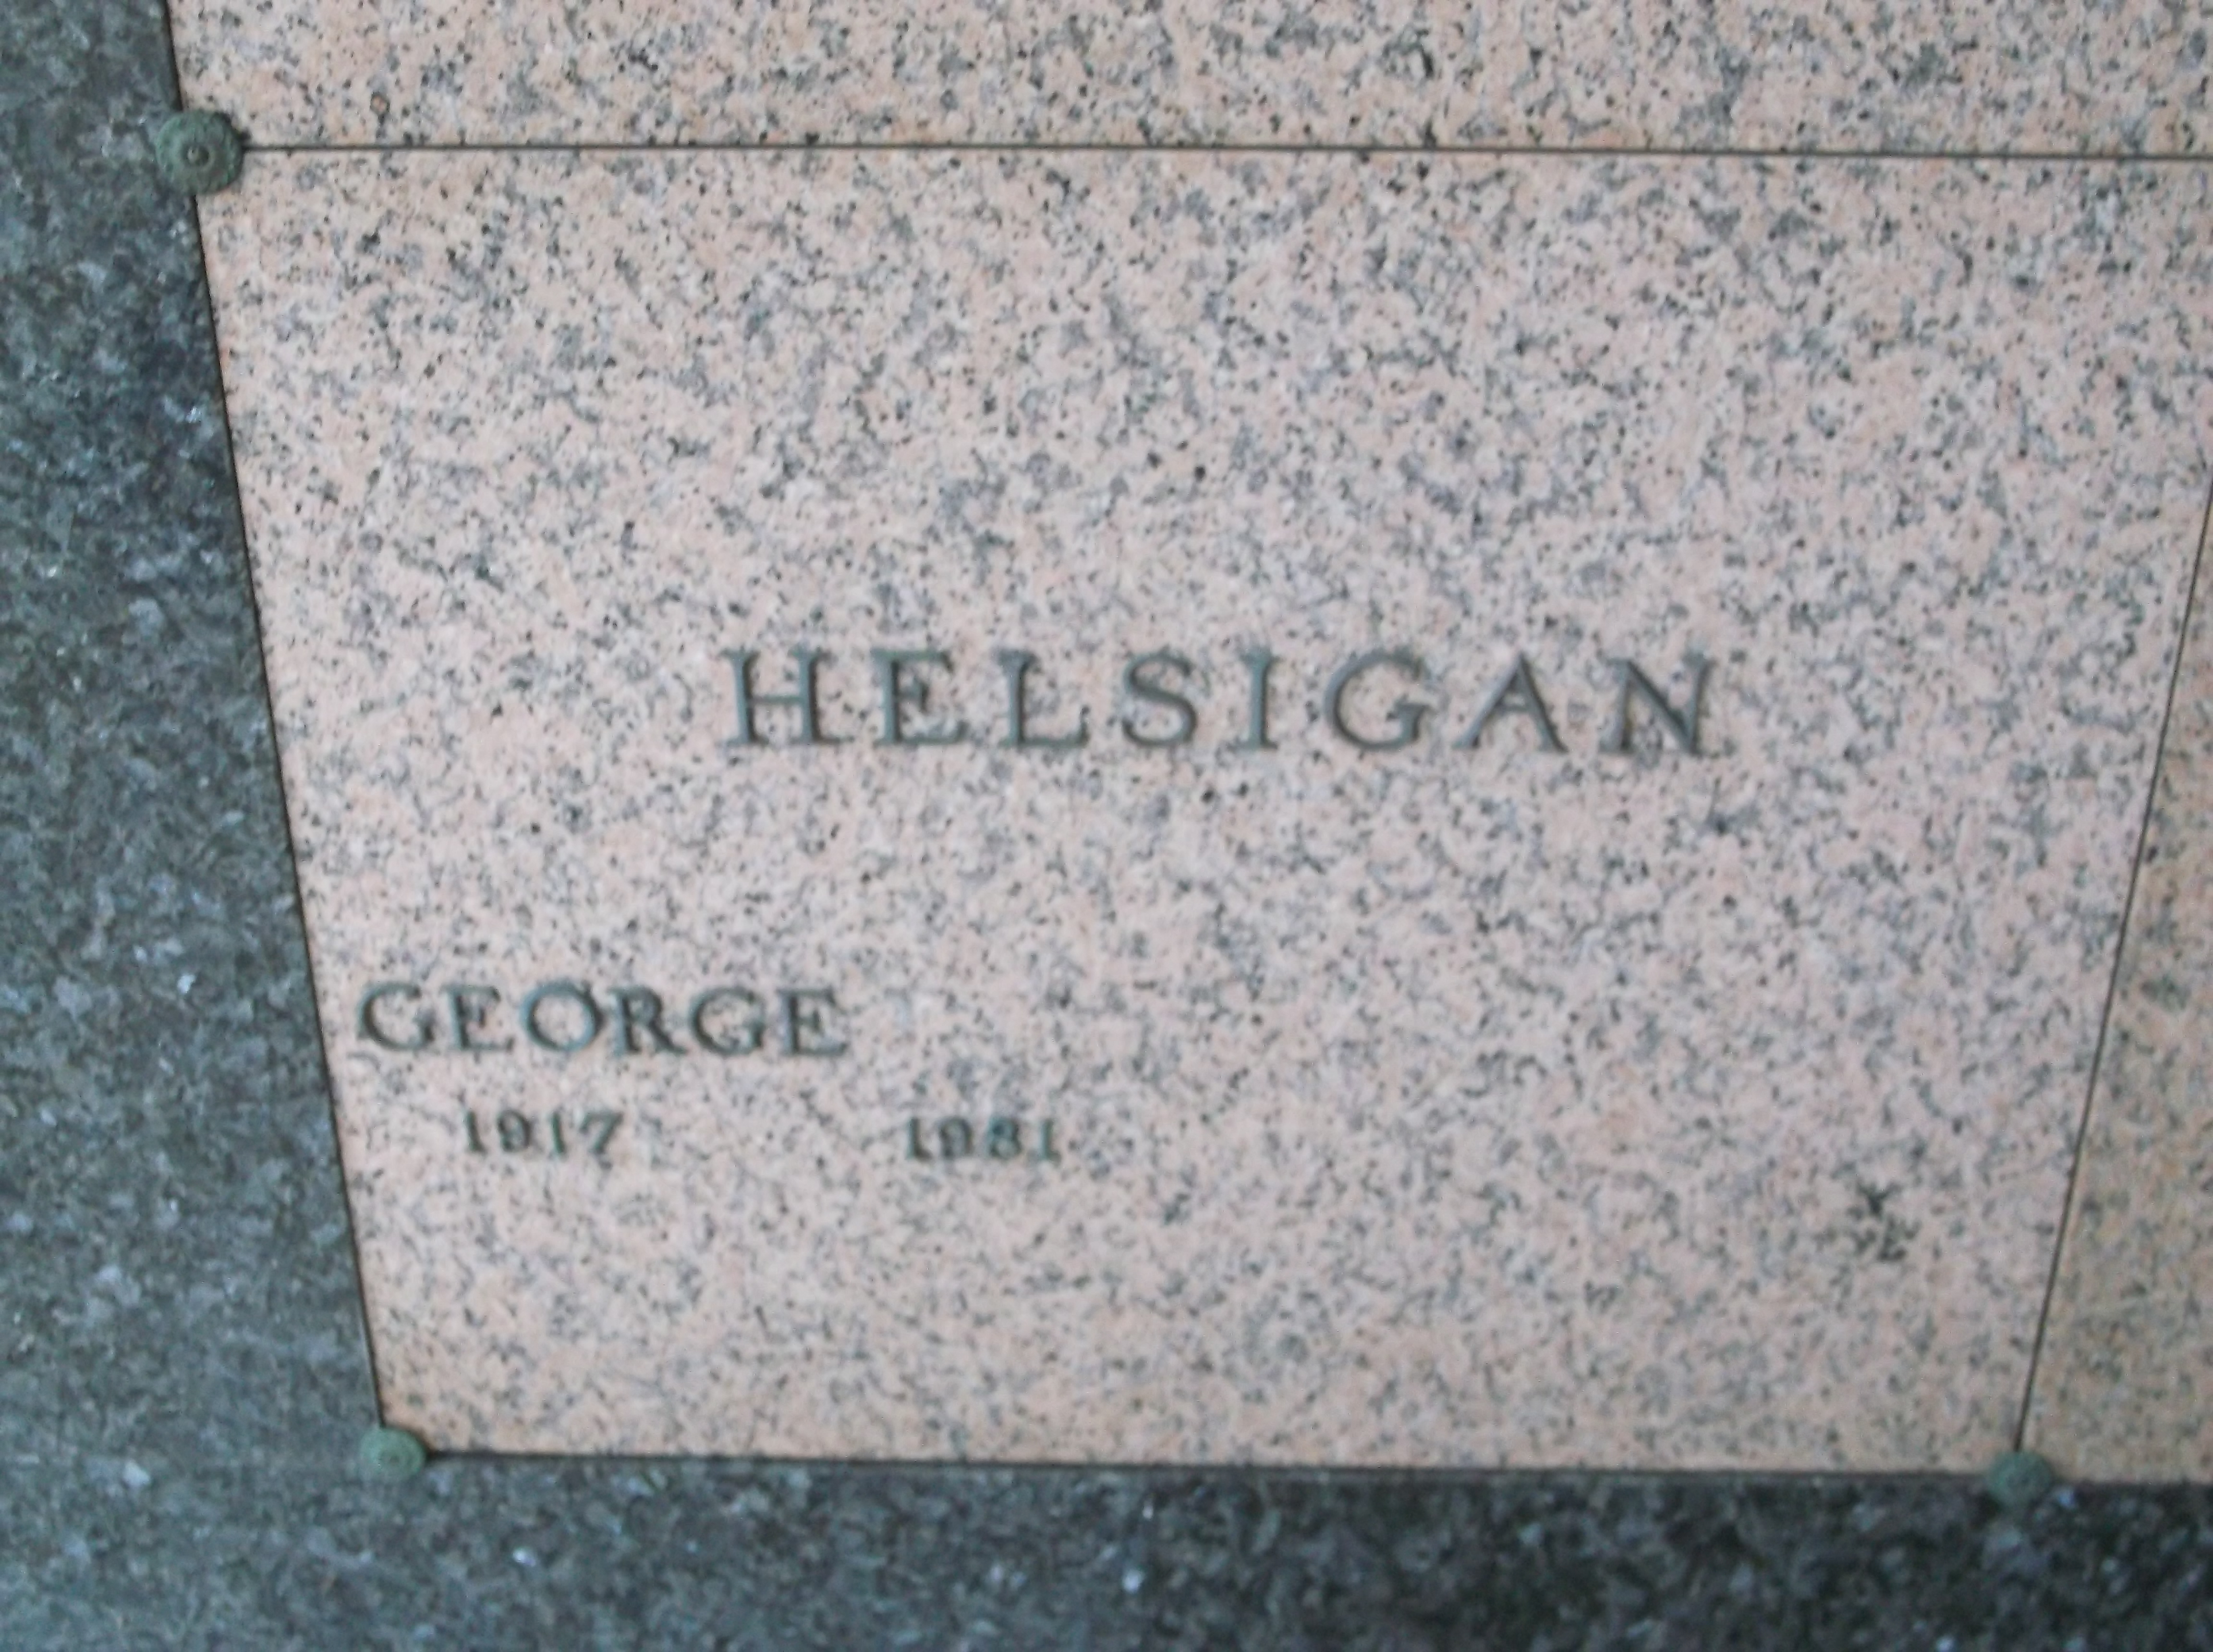 George Helsigan